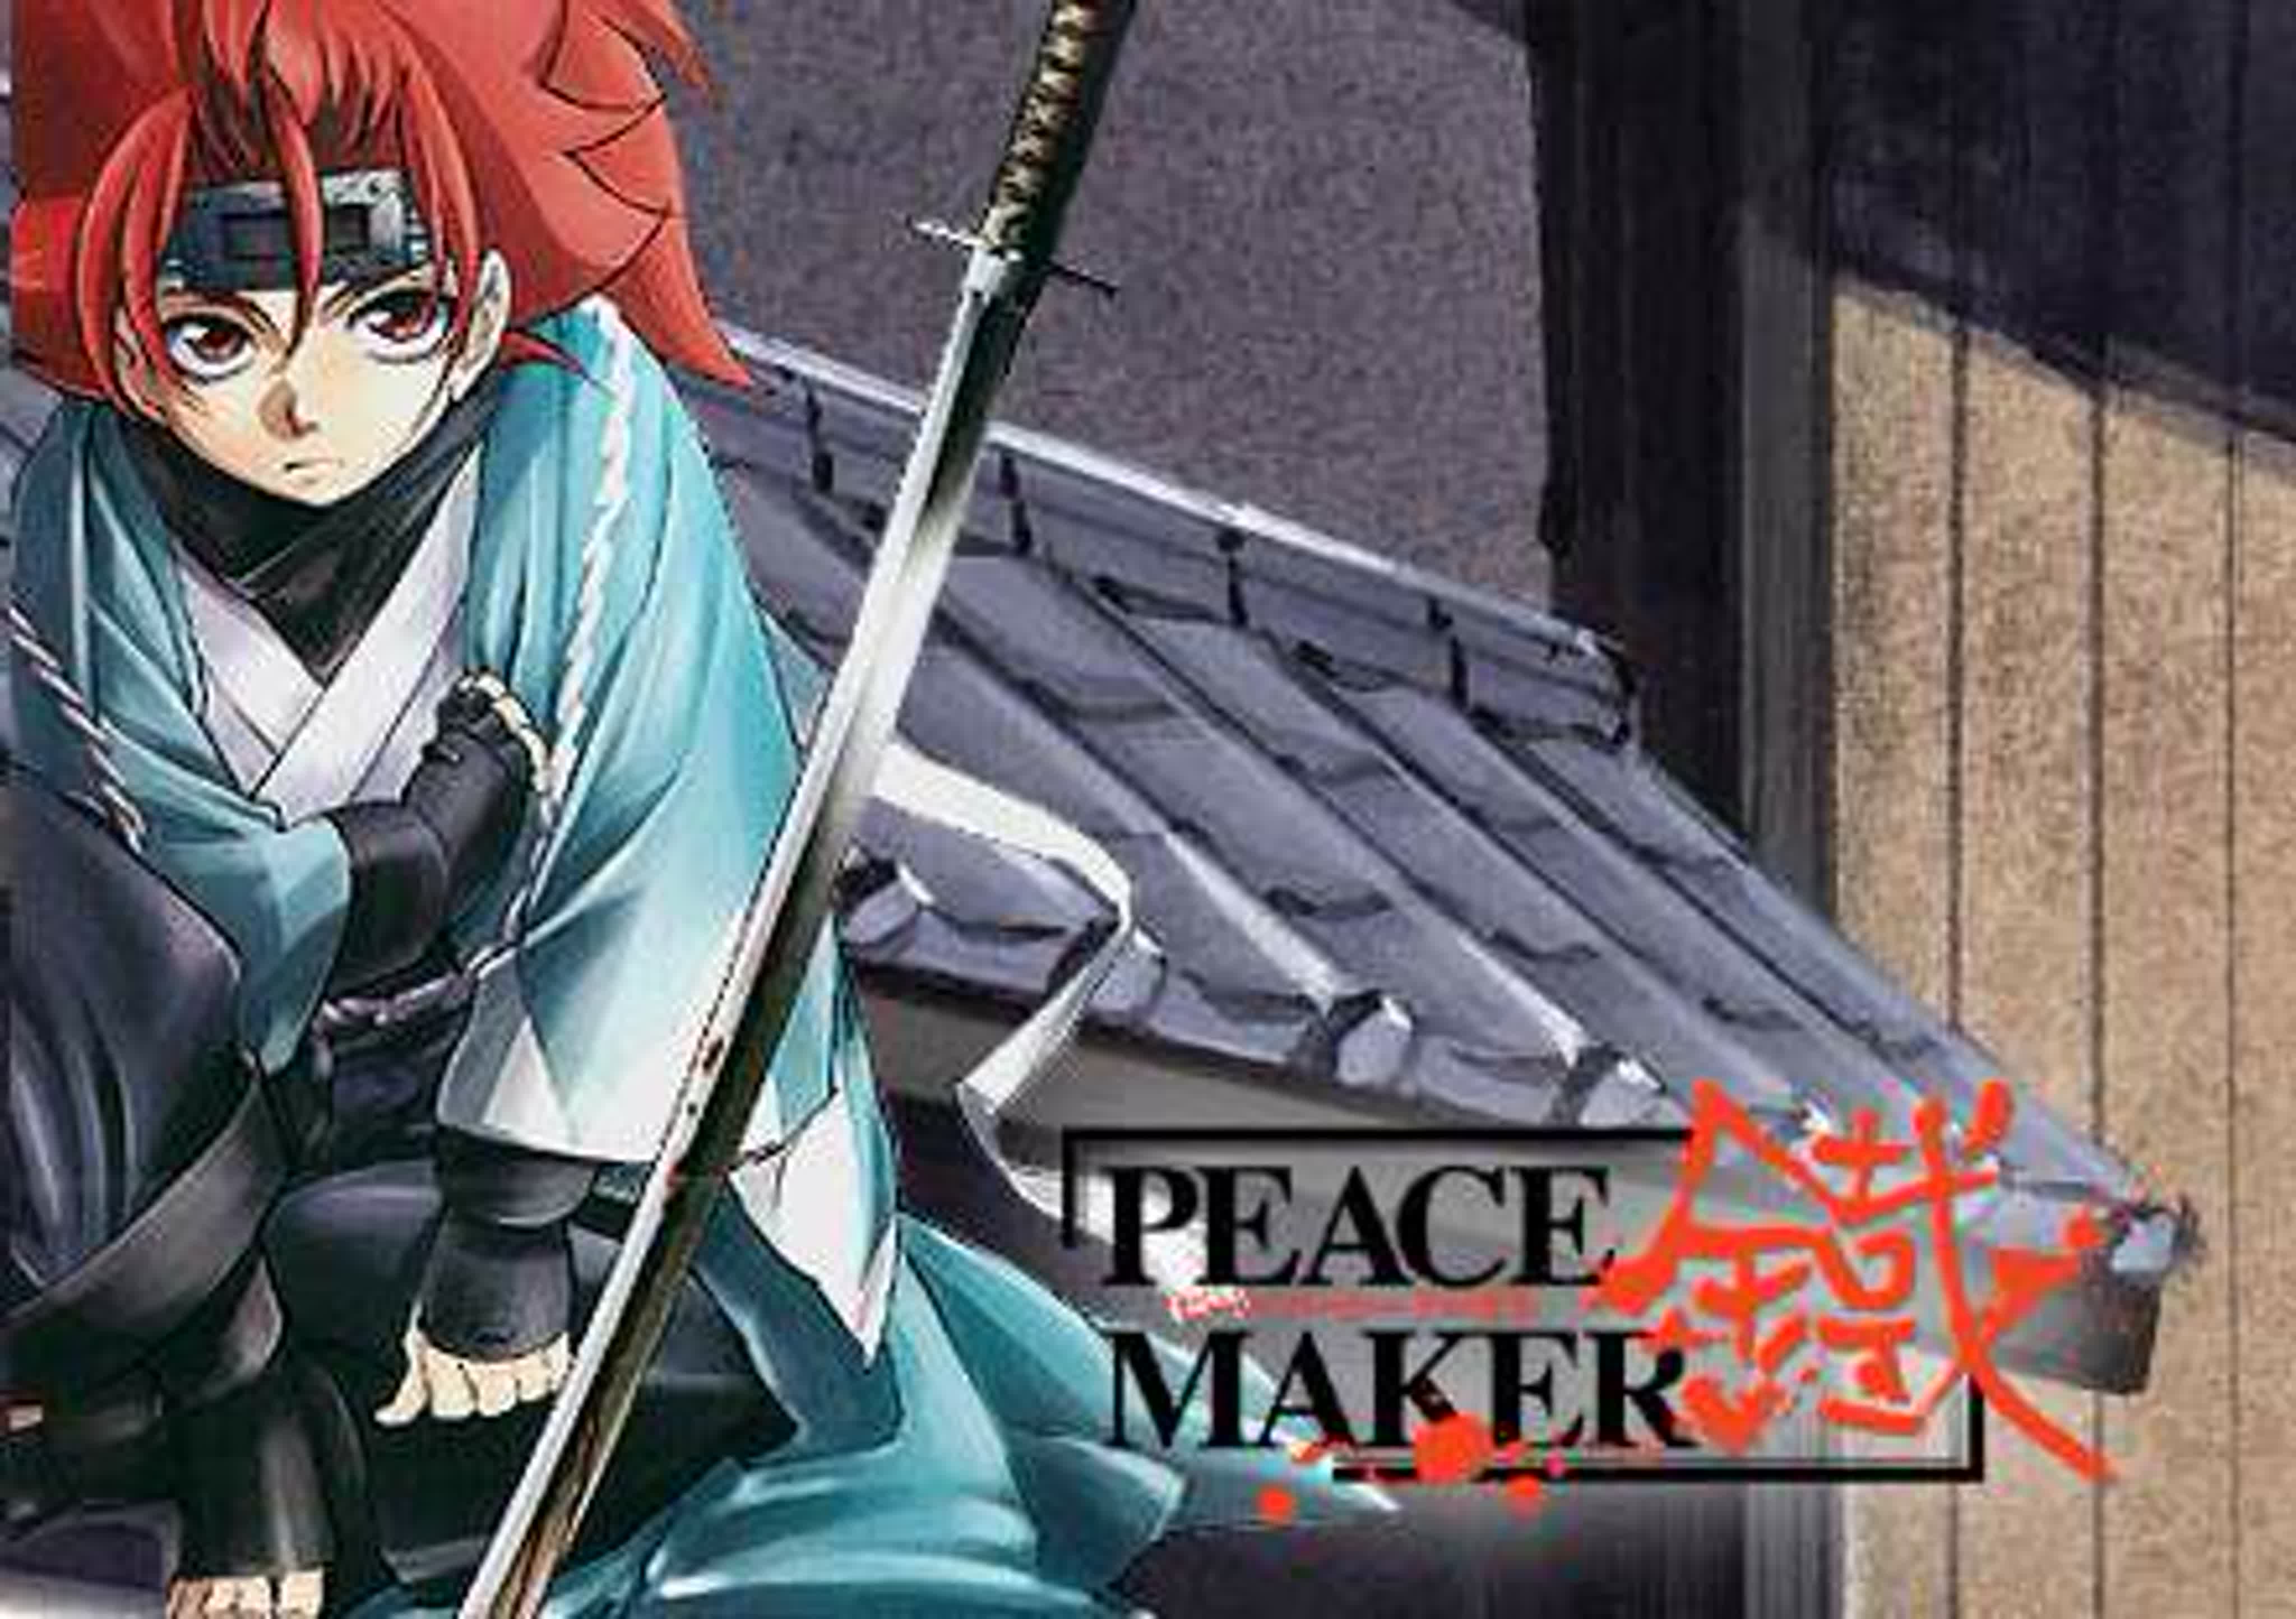 Железный миротворец / Peace Maker Kurogane